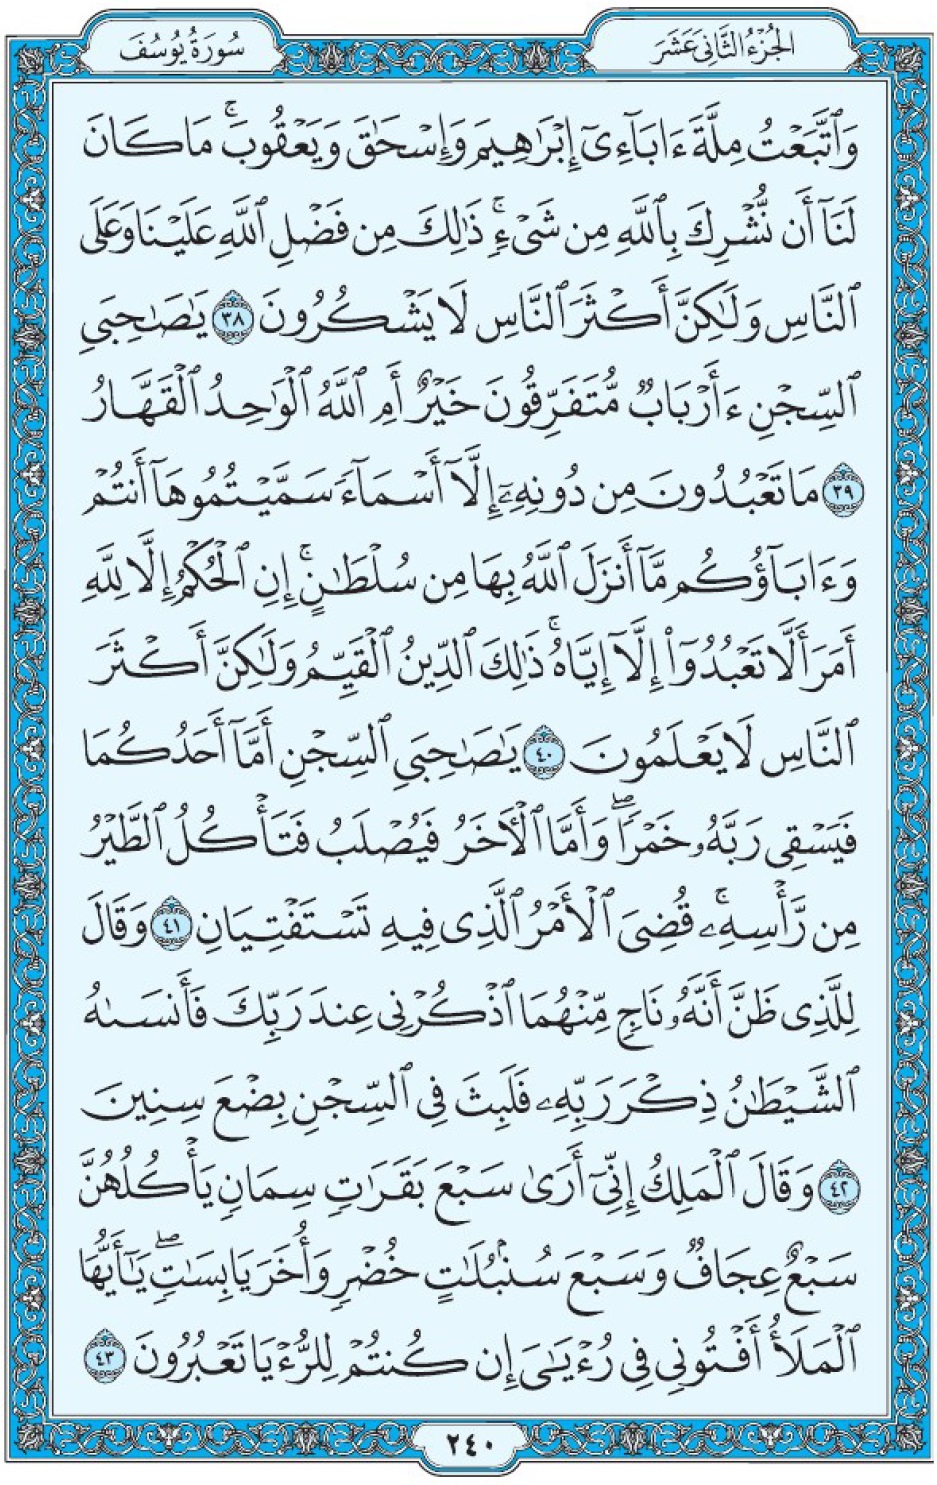 Коран Мединский мусхаф страница 240, Юсуф, аят 38-43